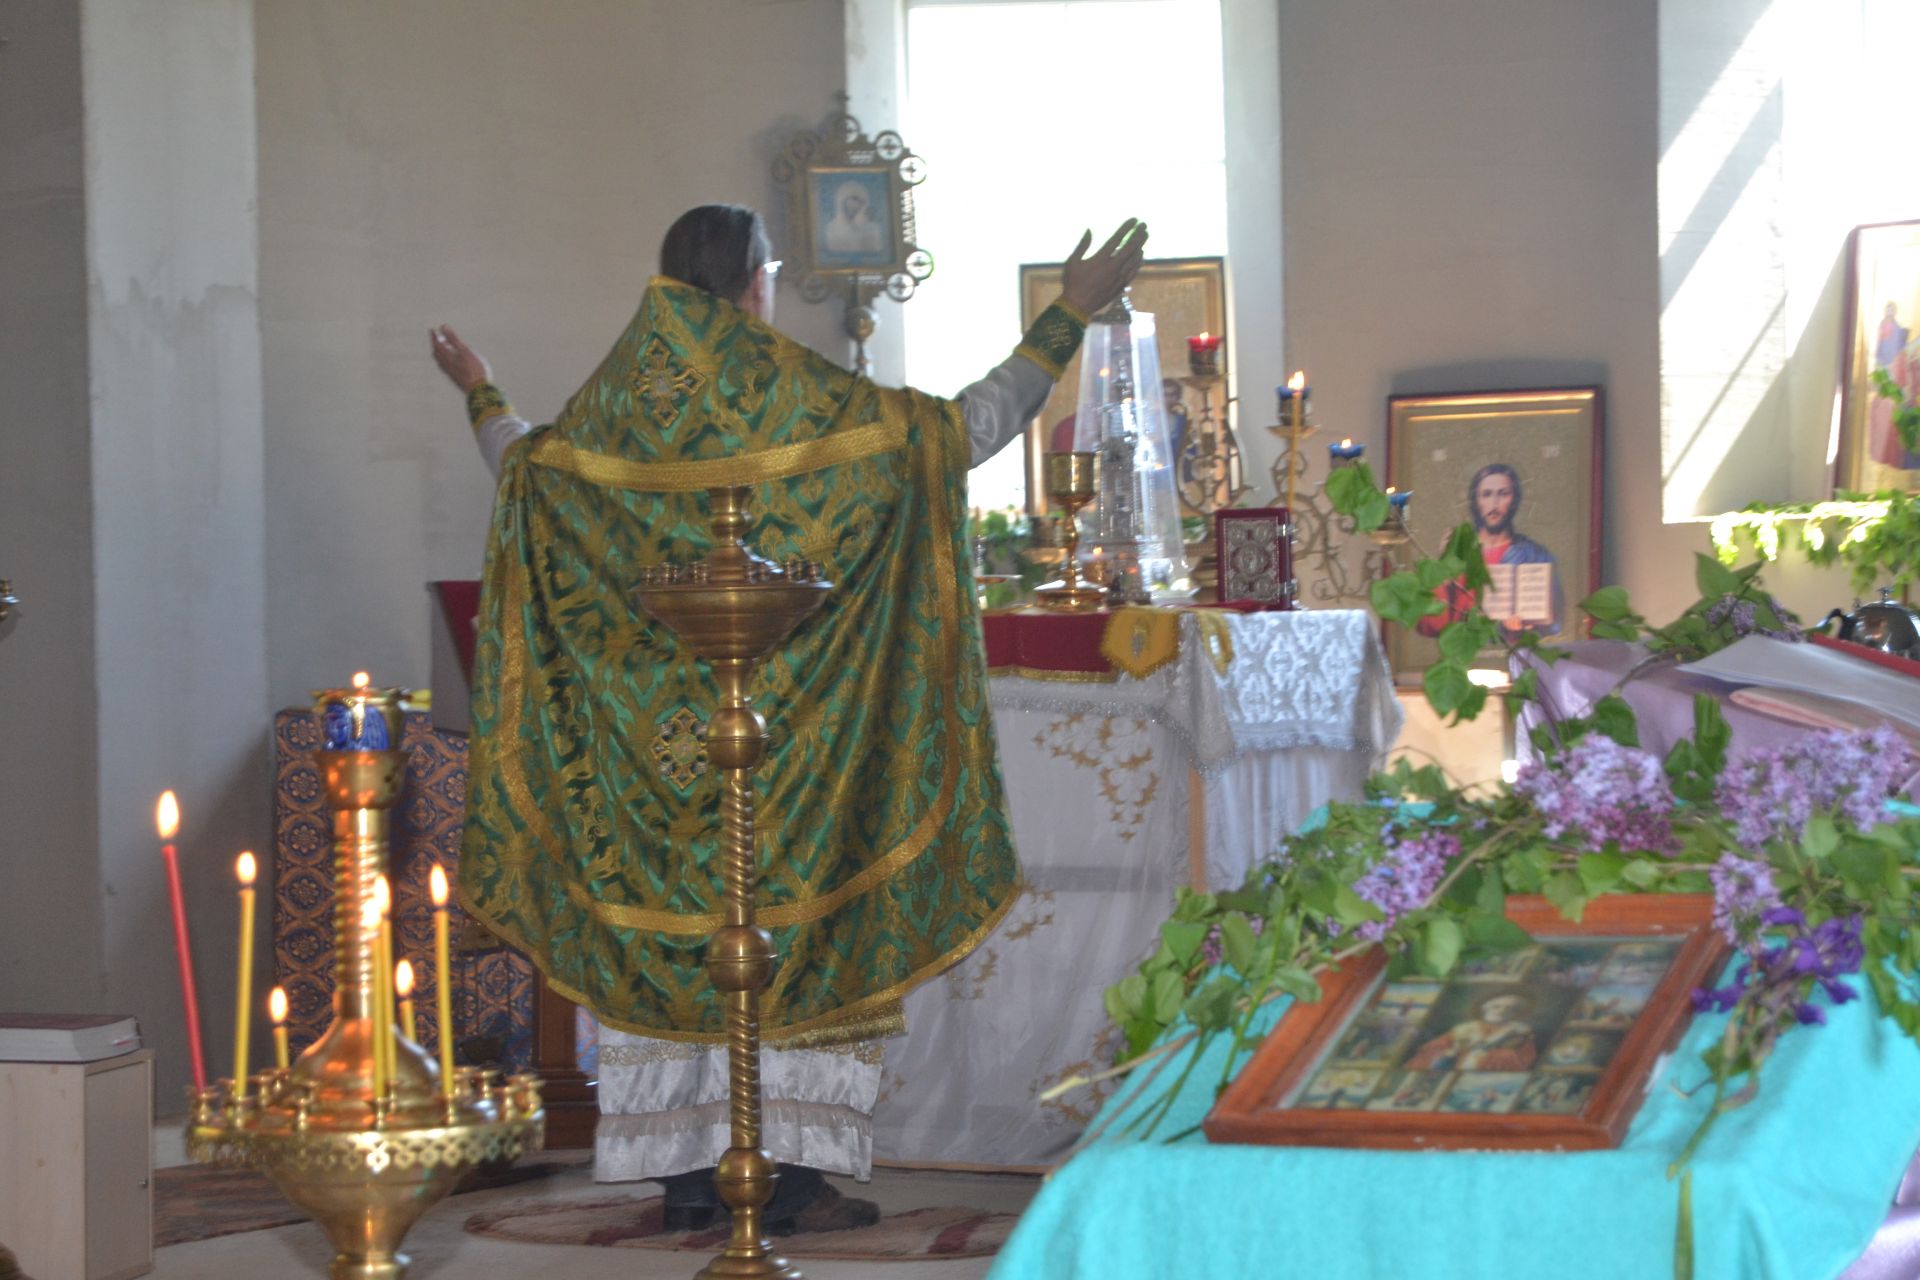 В храме Святителя Николая Чудотворца села Князево провели Троичное богослужение